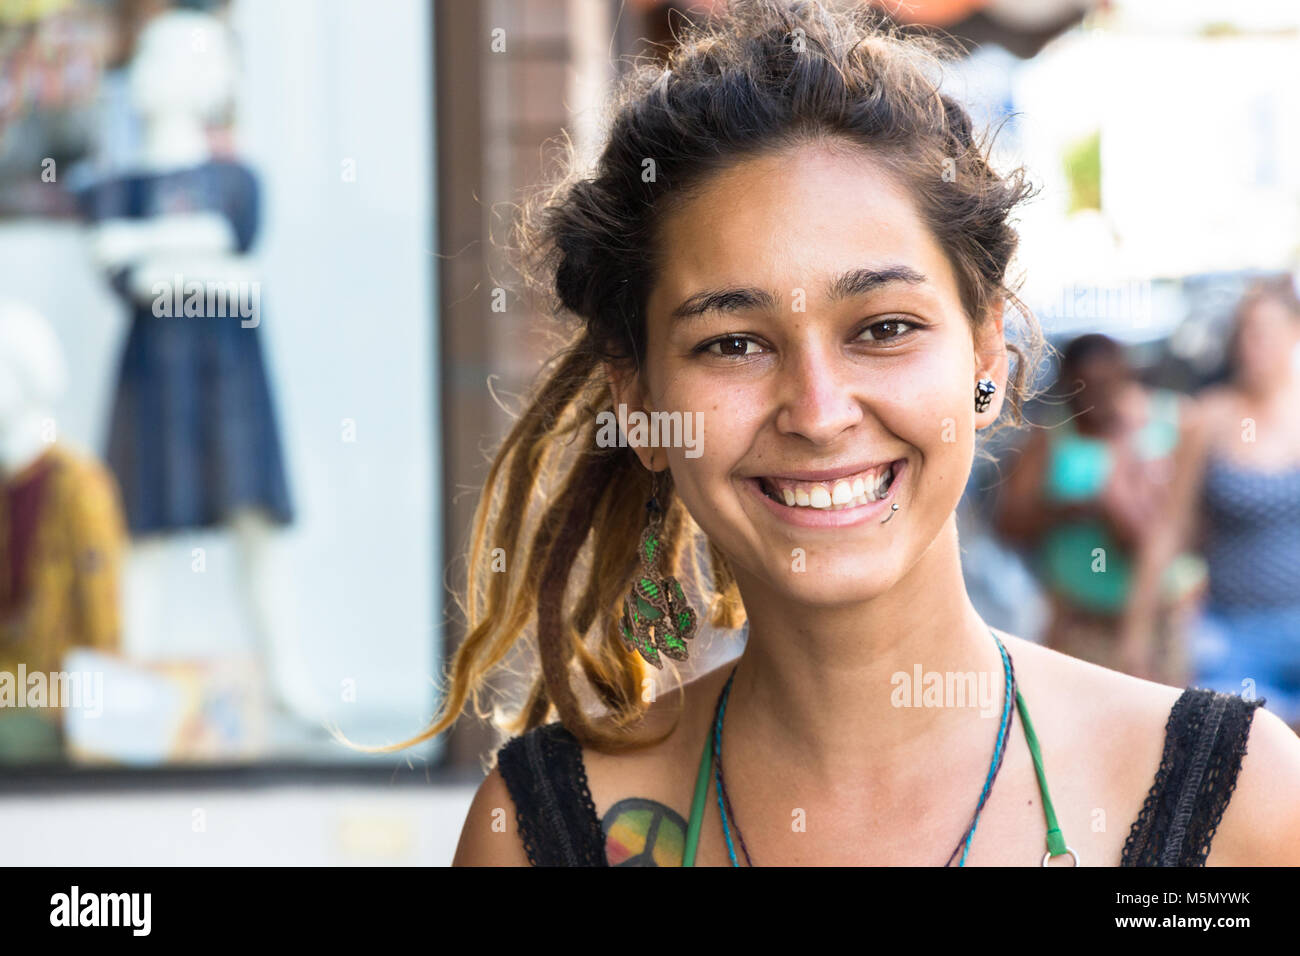 Itajai, Santa Catarina, Brazil - February 22th, 2018: A female brazilian street bracelets vendor, with tattoo and piercing in her face smiling at street. Stock Photo